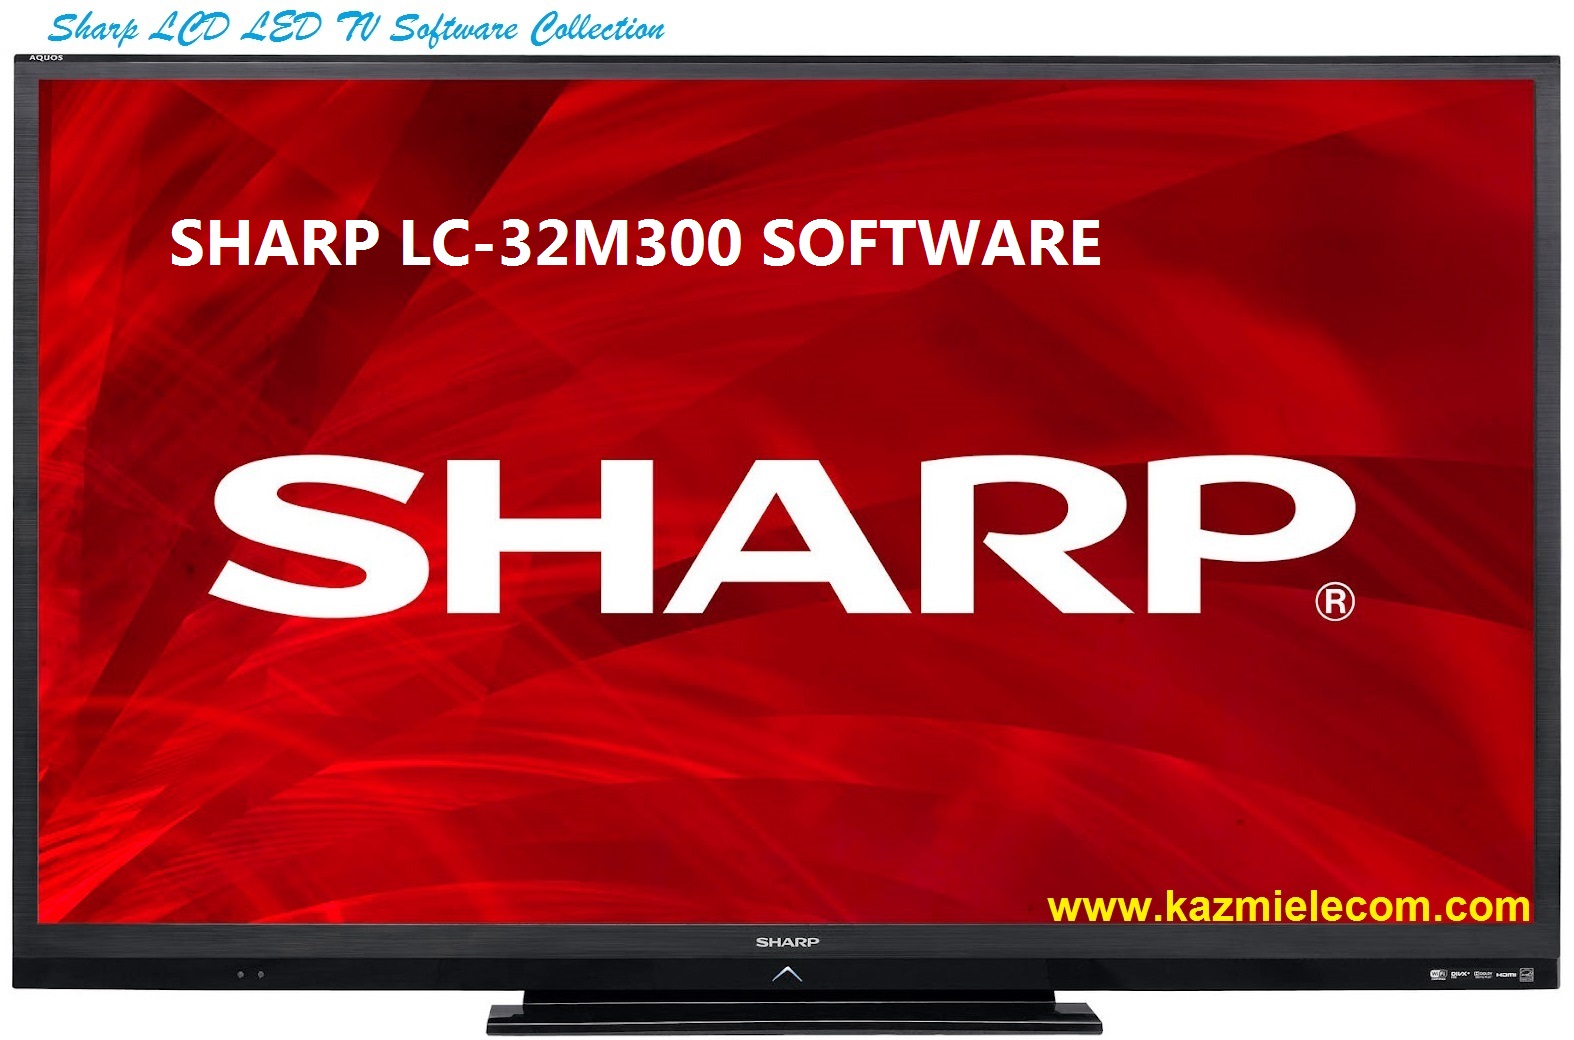 Sharp Lc-32M300